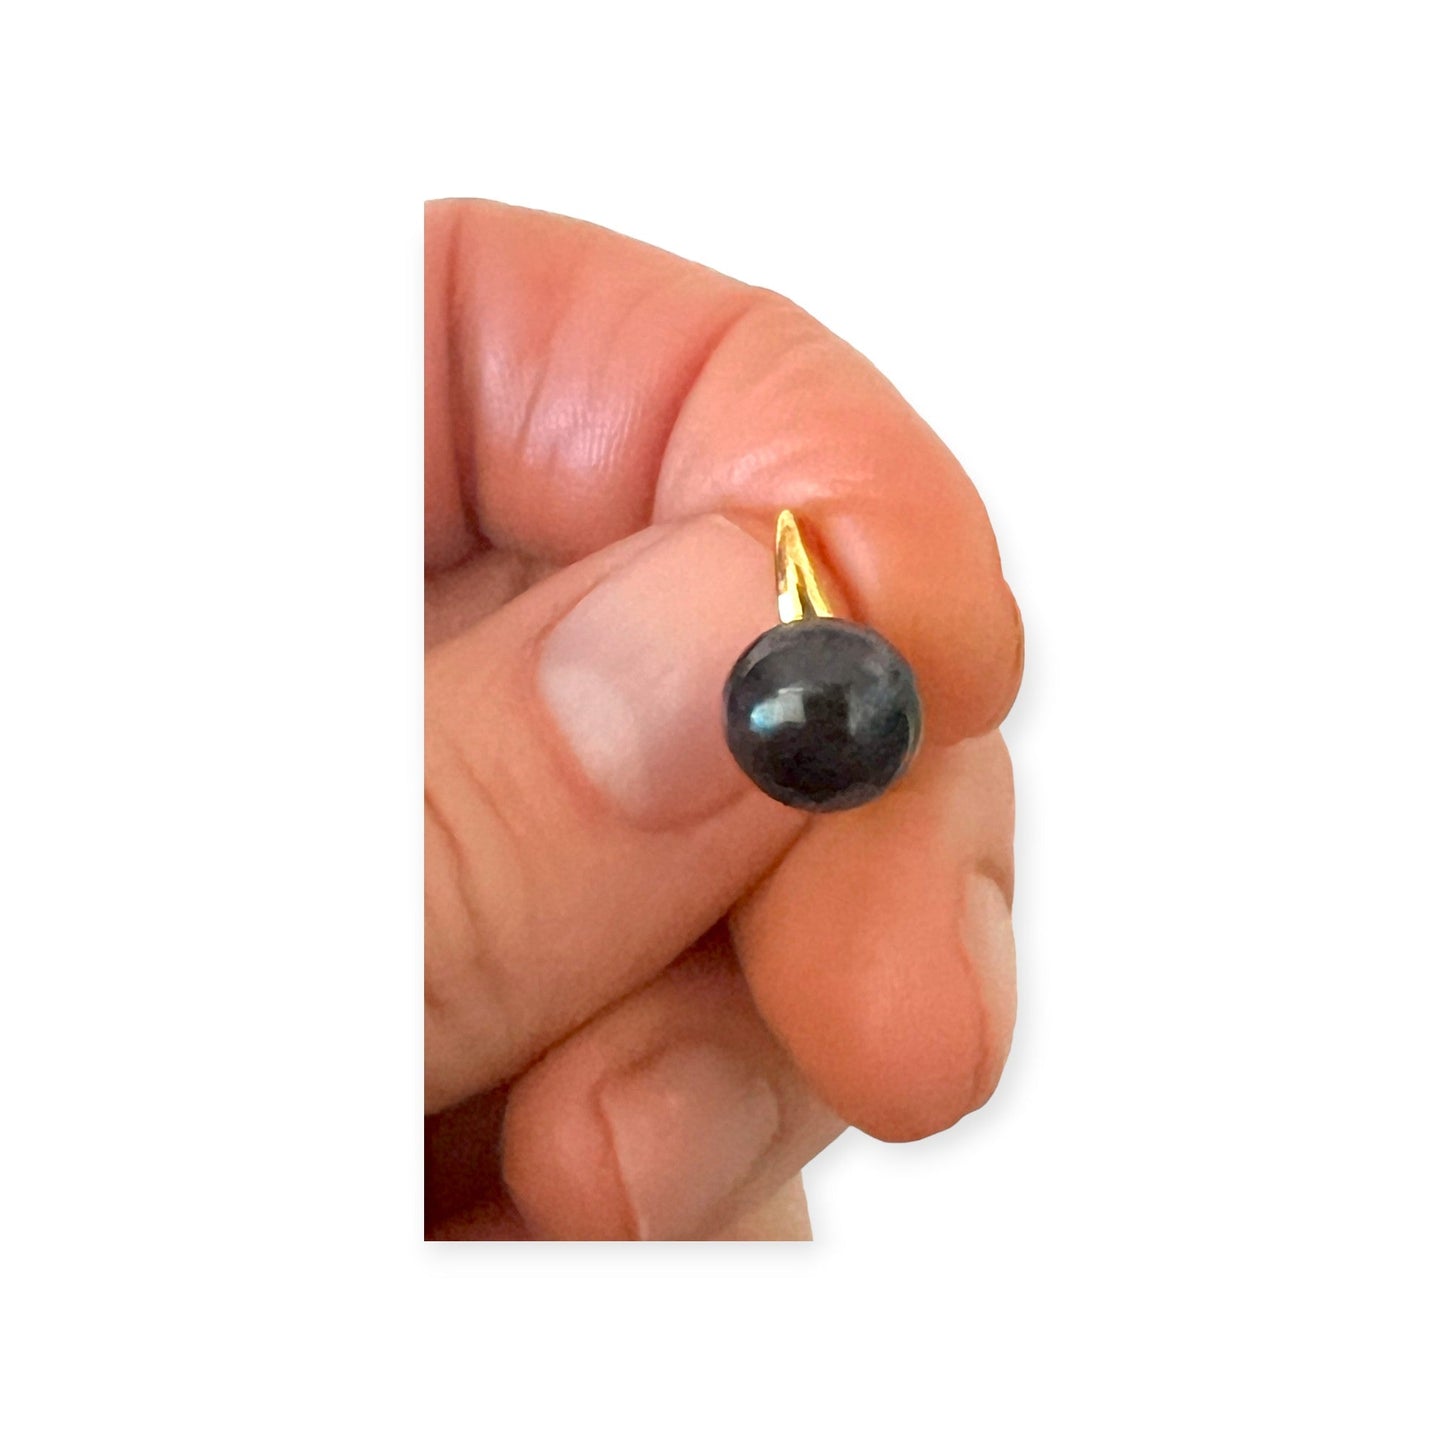 Petite simple modern pearl drop earrings - Sundara Joon